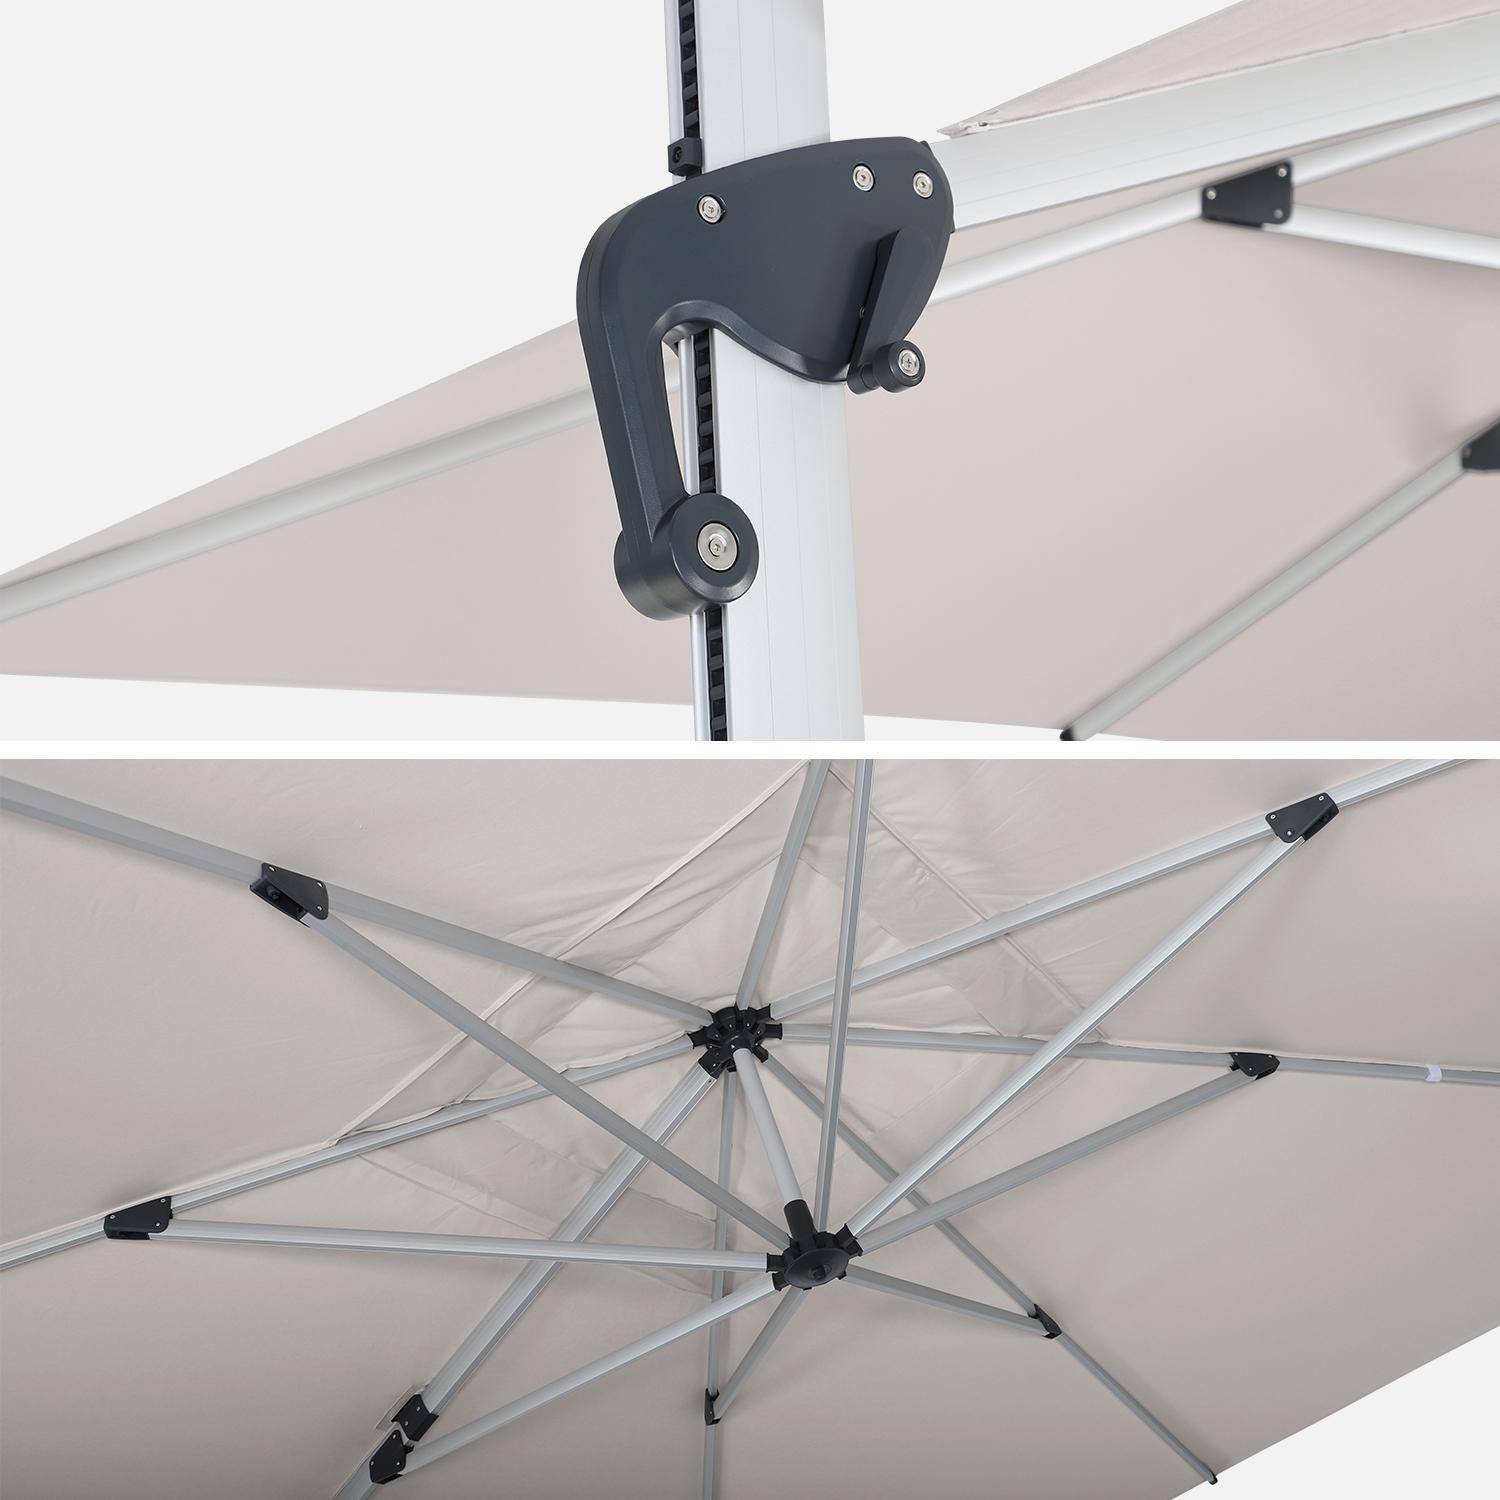 Topklasse parasol, 4x4m, beige polyester doek, geanodiseerd aluminium frame, hoes inbegrepen Photo5